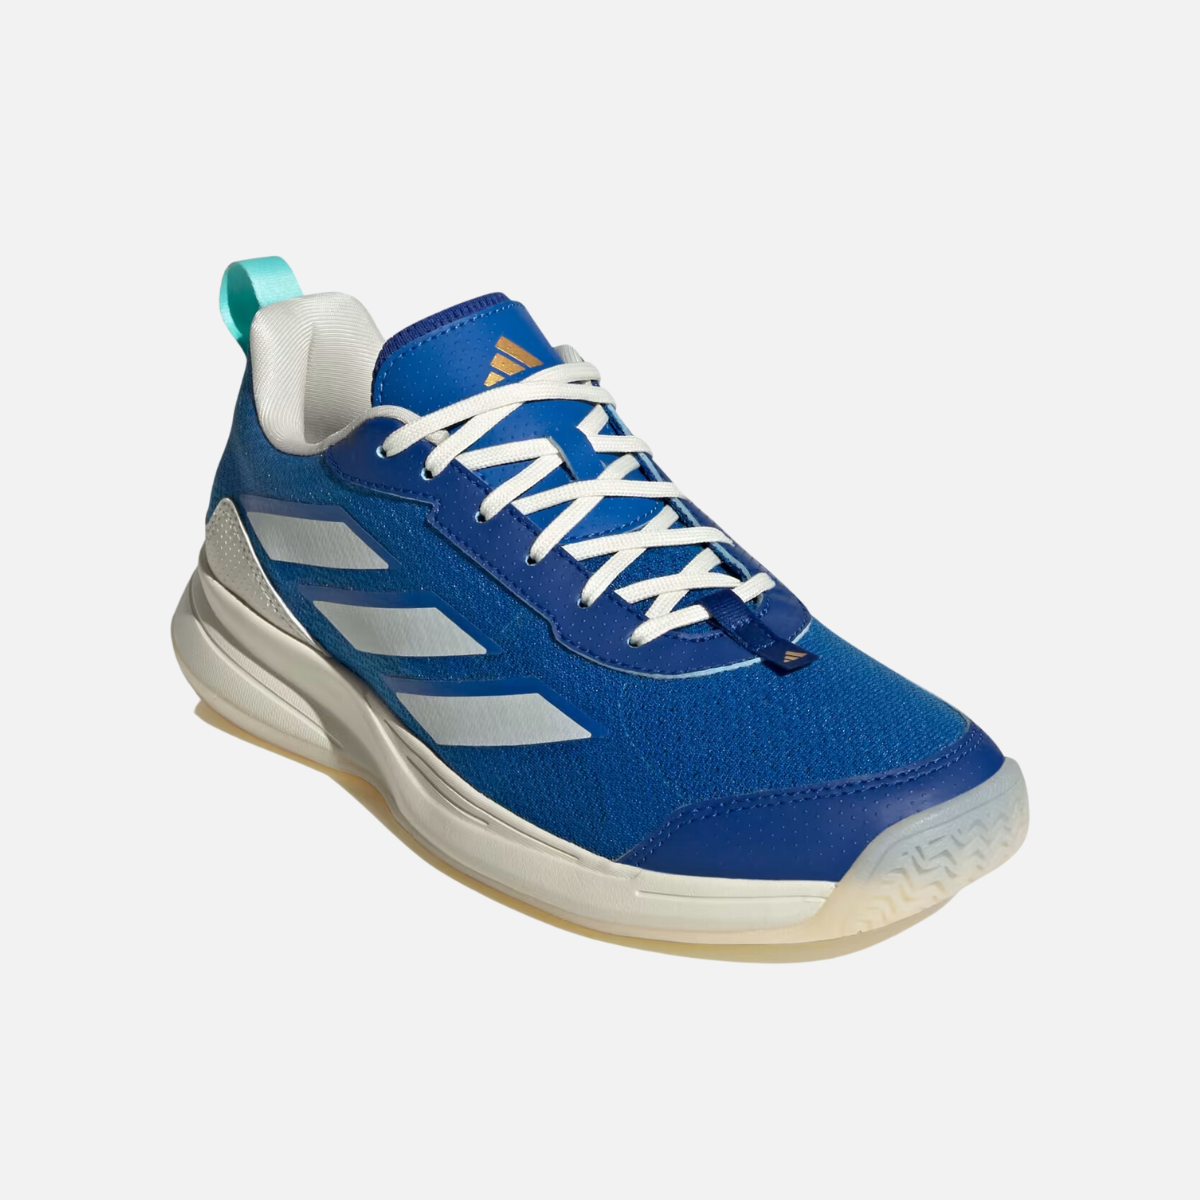 Adidas Avaflash Low Women's Tennis Shoes -Bright Royal/Off White/Royal Blue